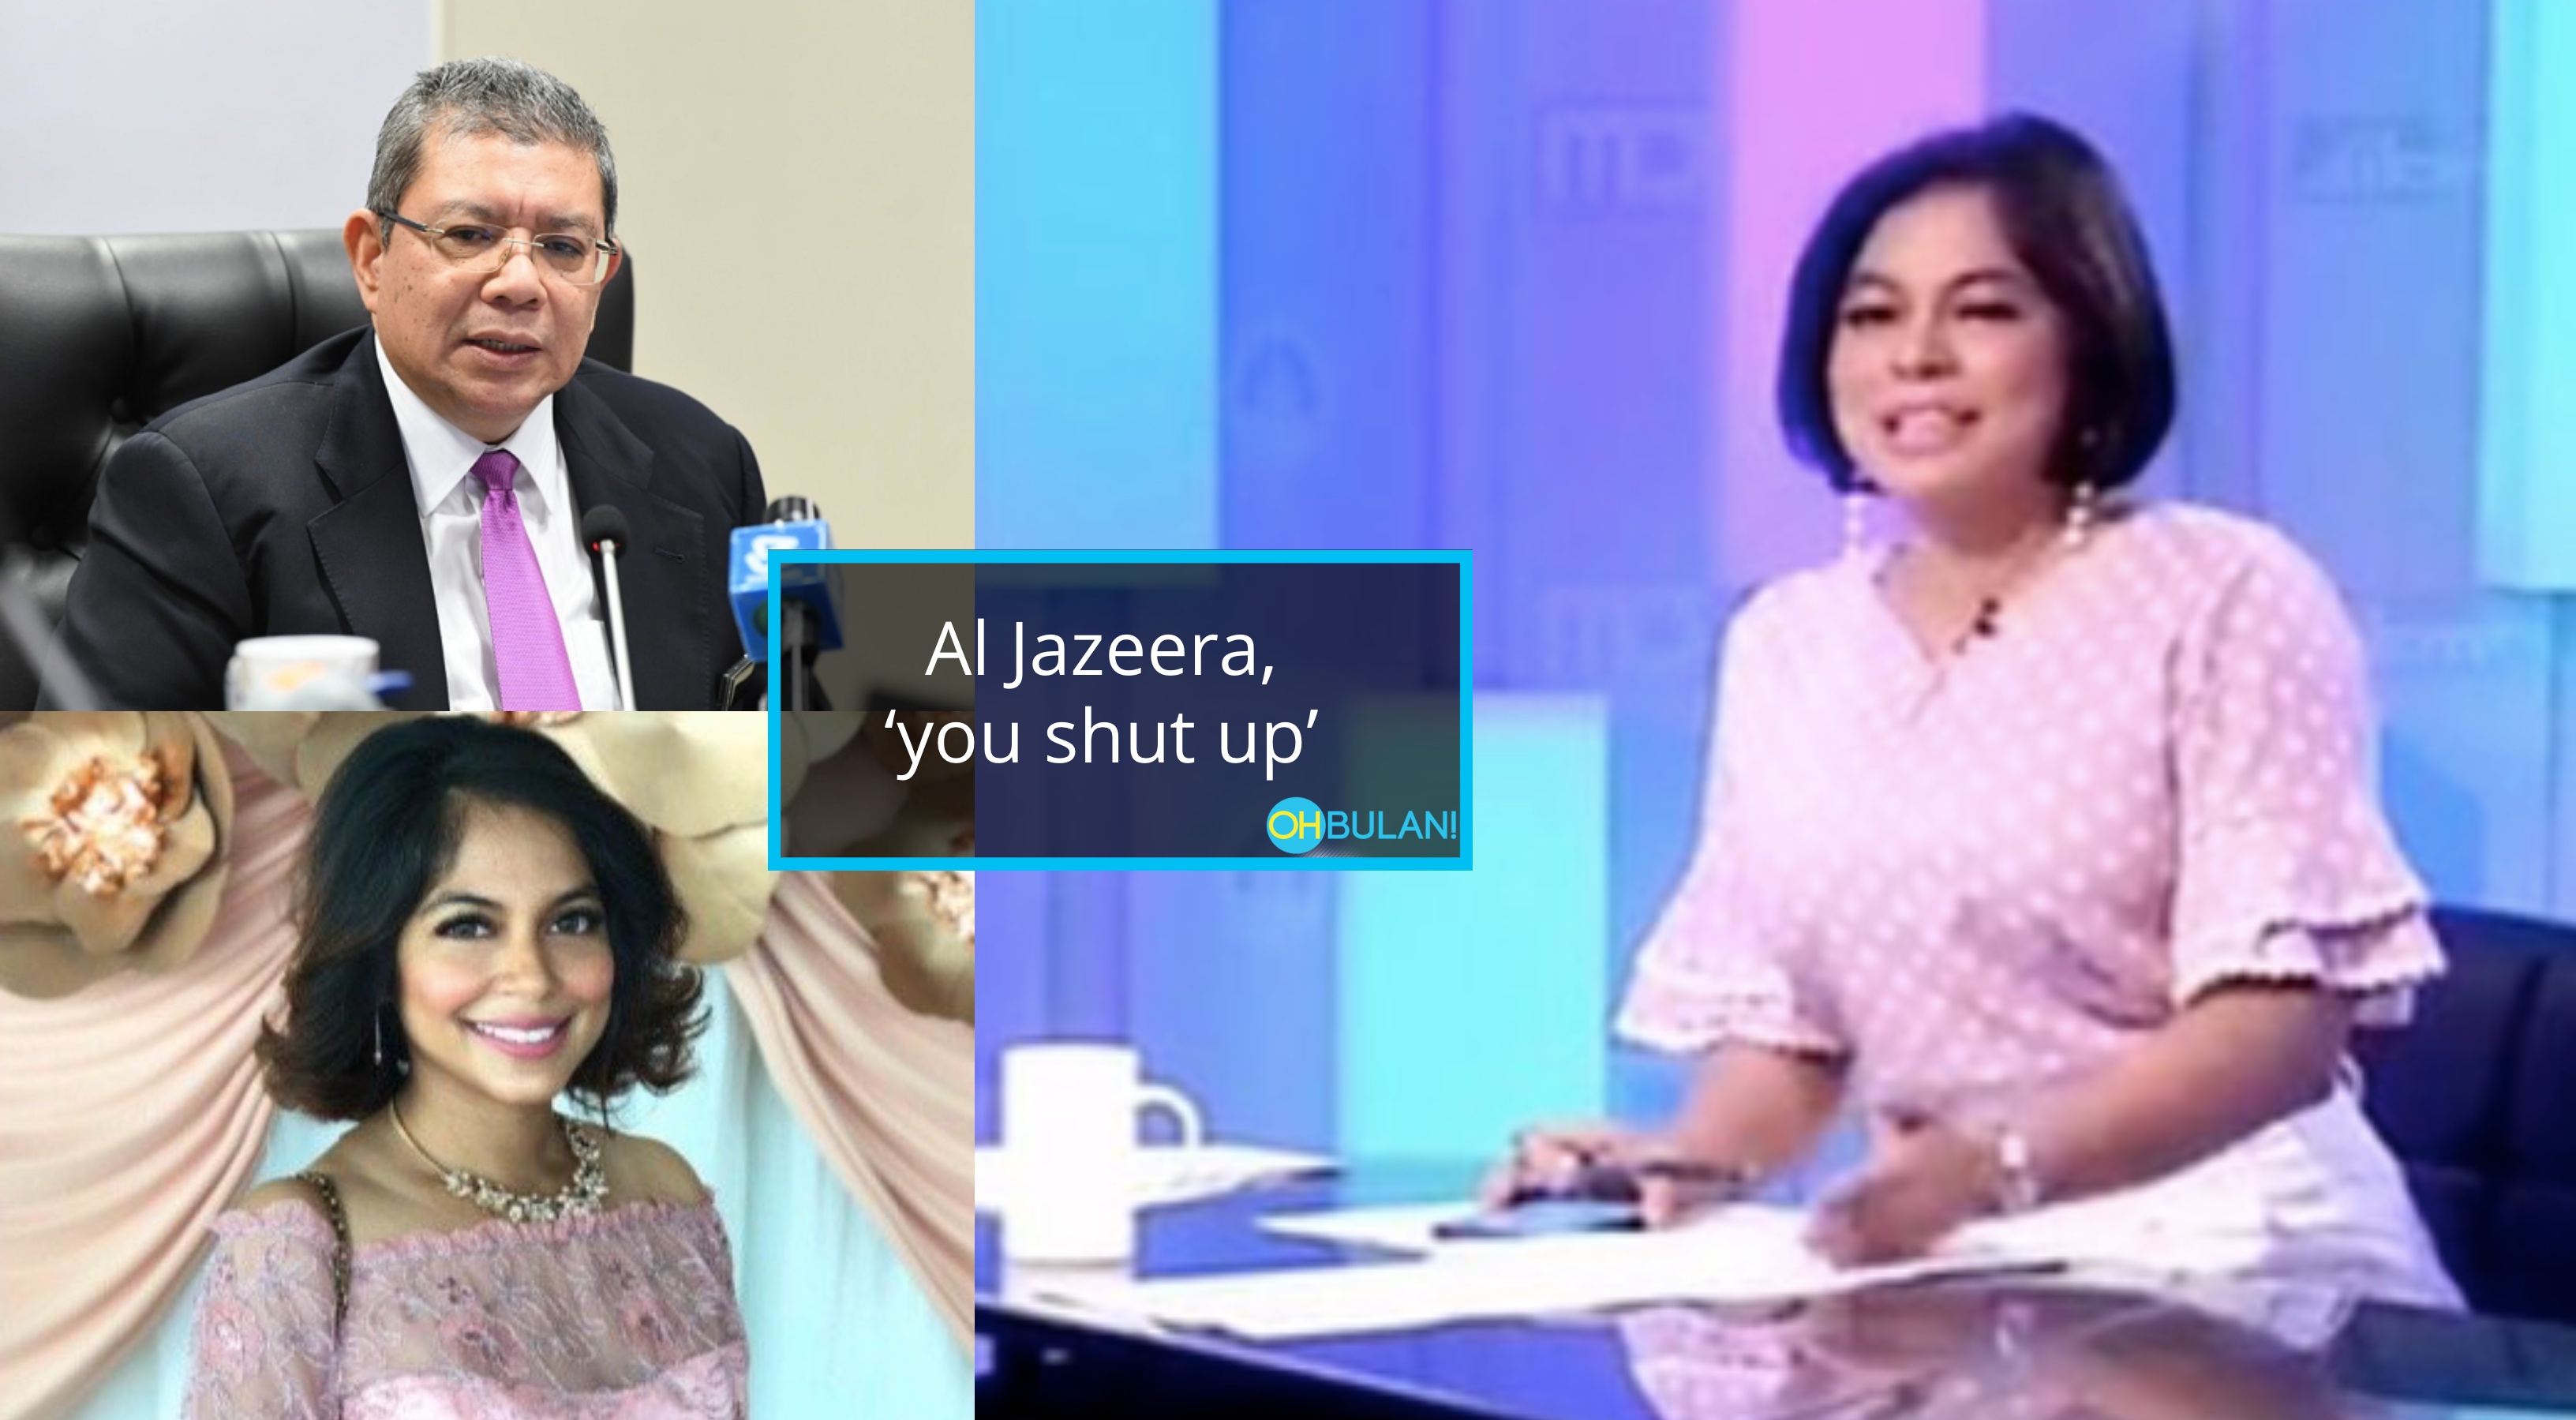 Gelar Al Jazeera Sebagai ‘Al Jahiliyah’, Pengacara TV Dikenakan Tindakan